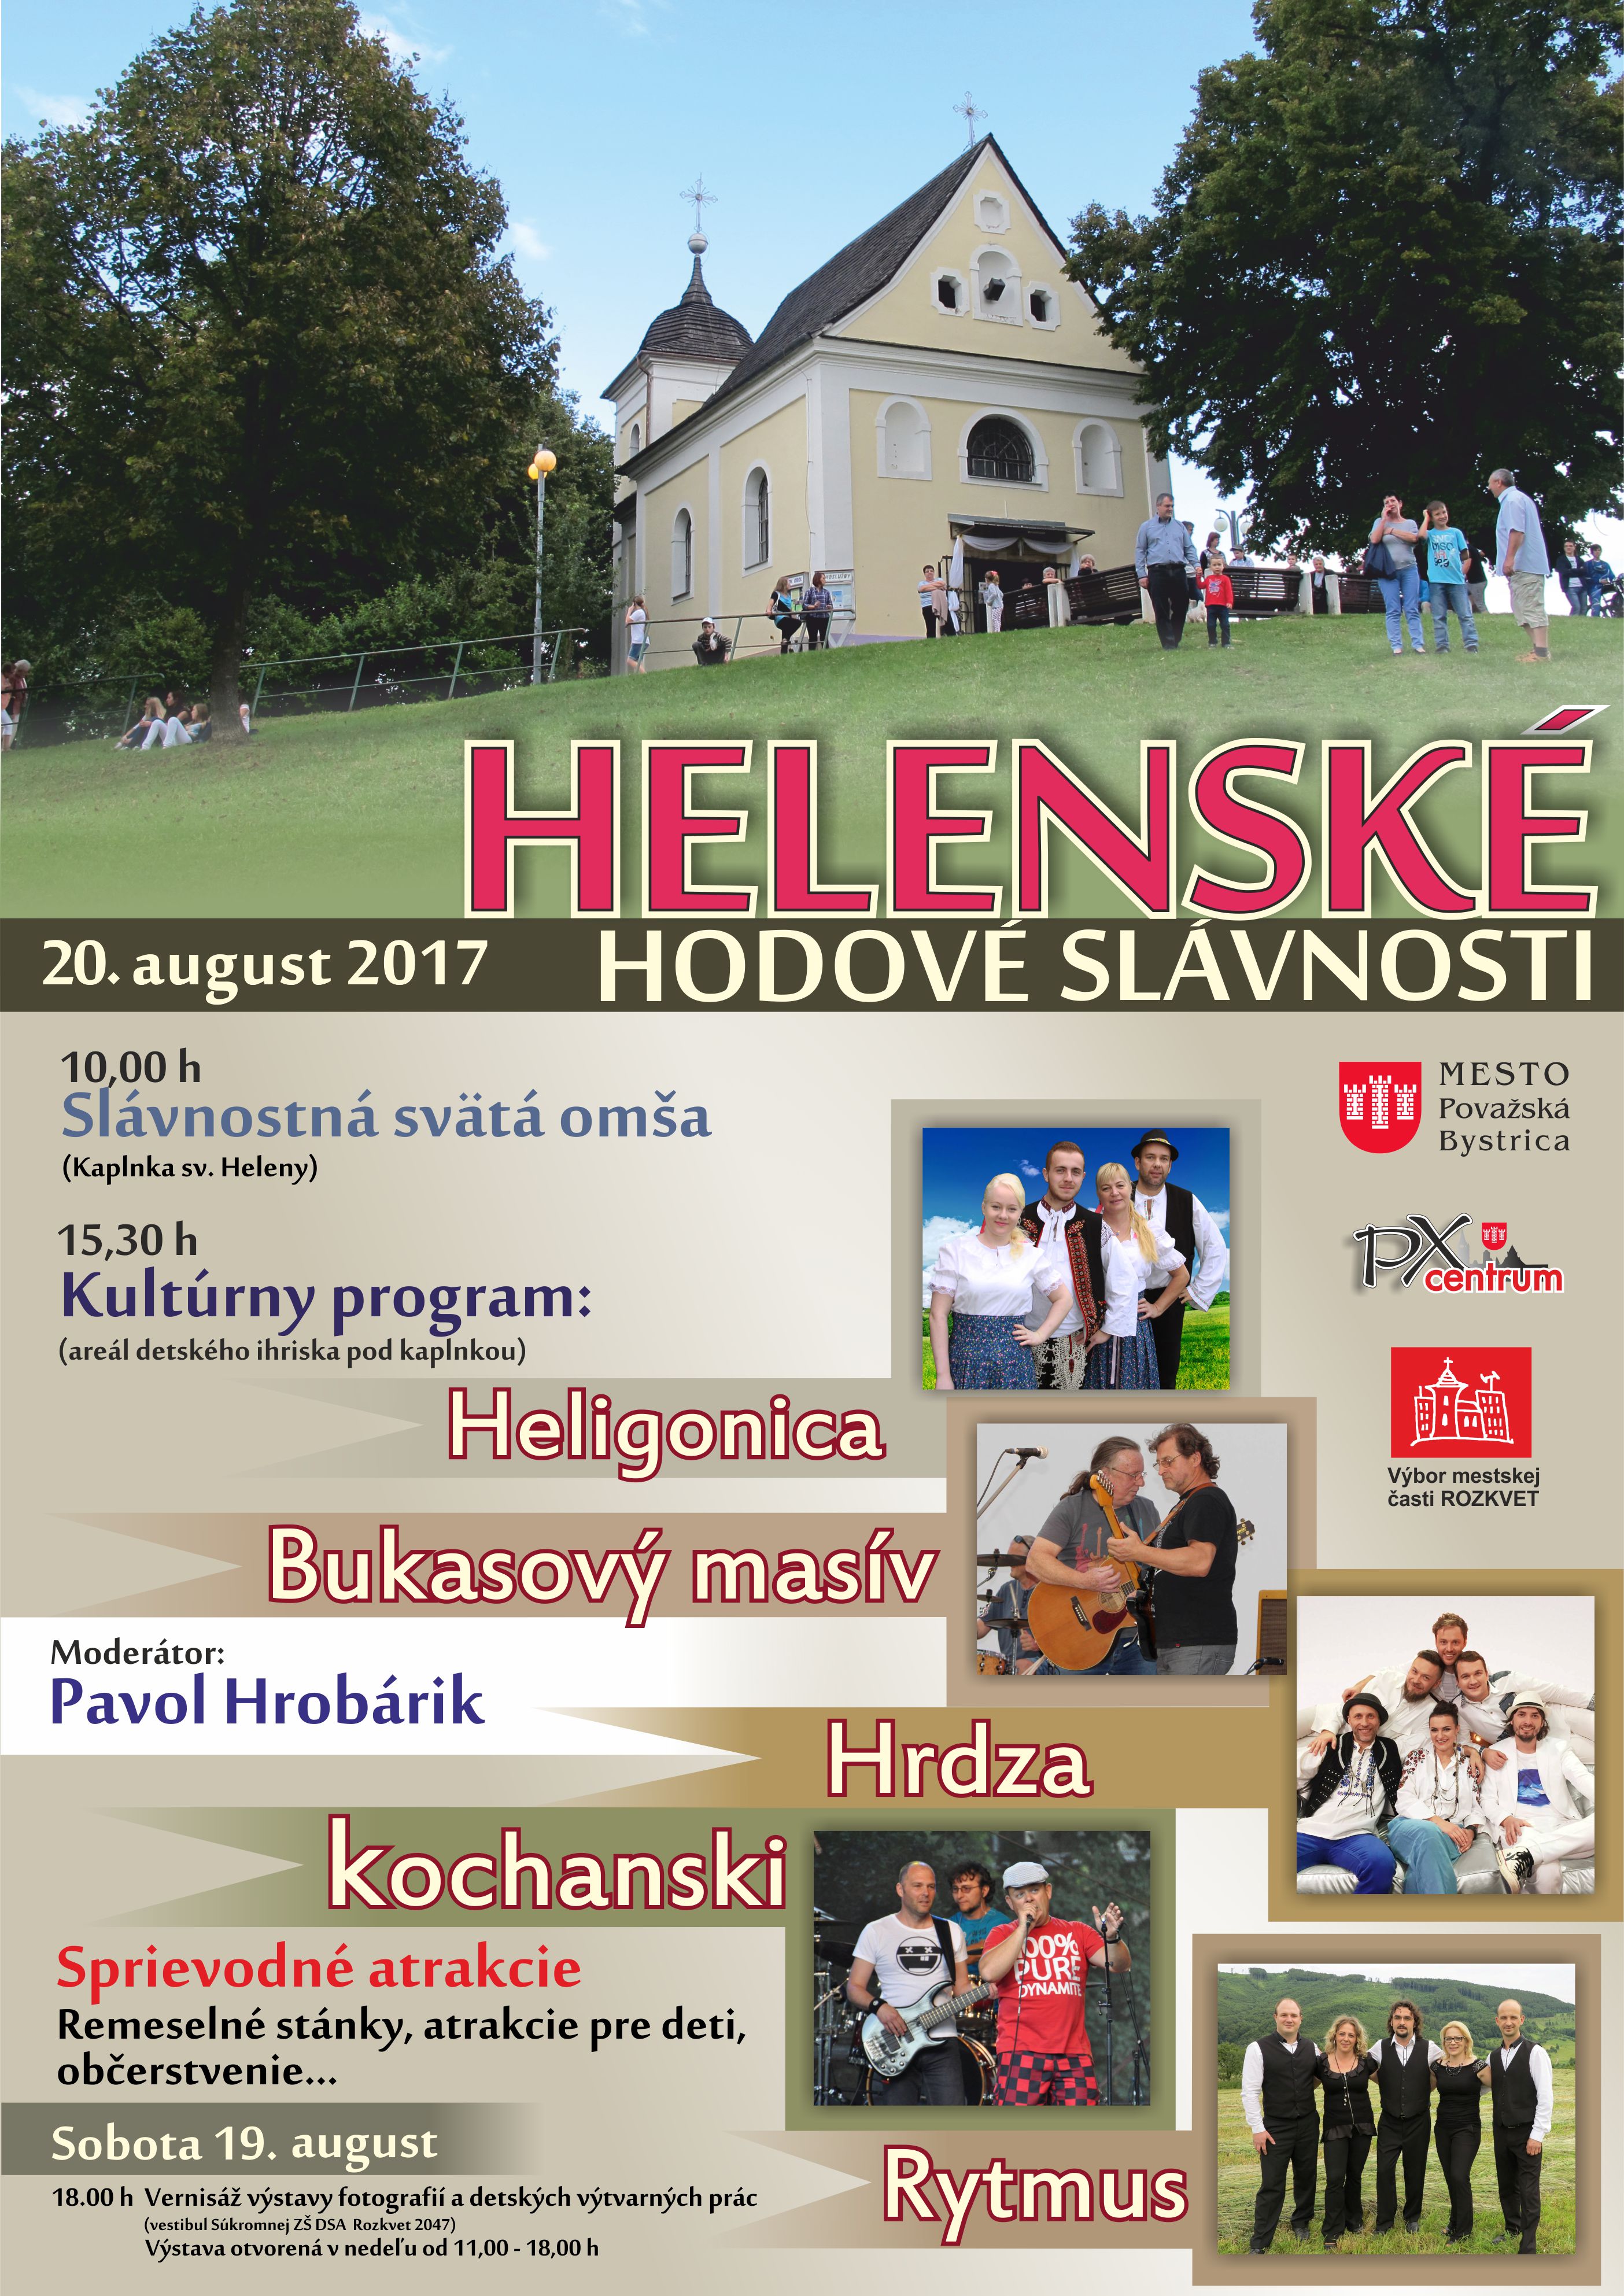 Helensk hodov slvnosti Povask Bystrica 2017 -17. ronk